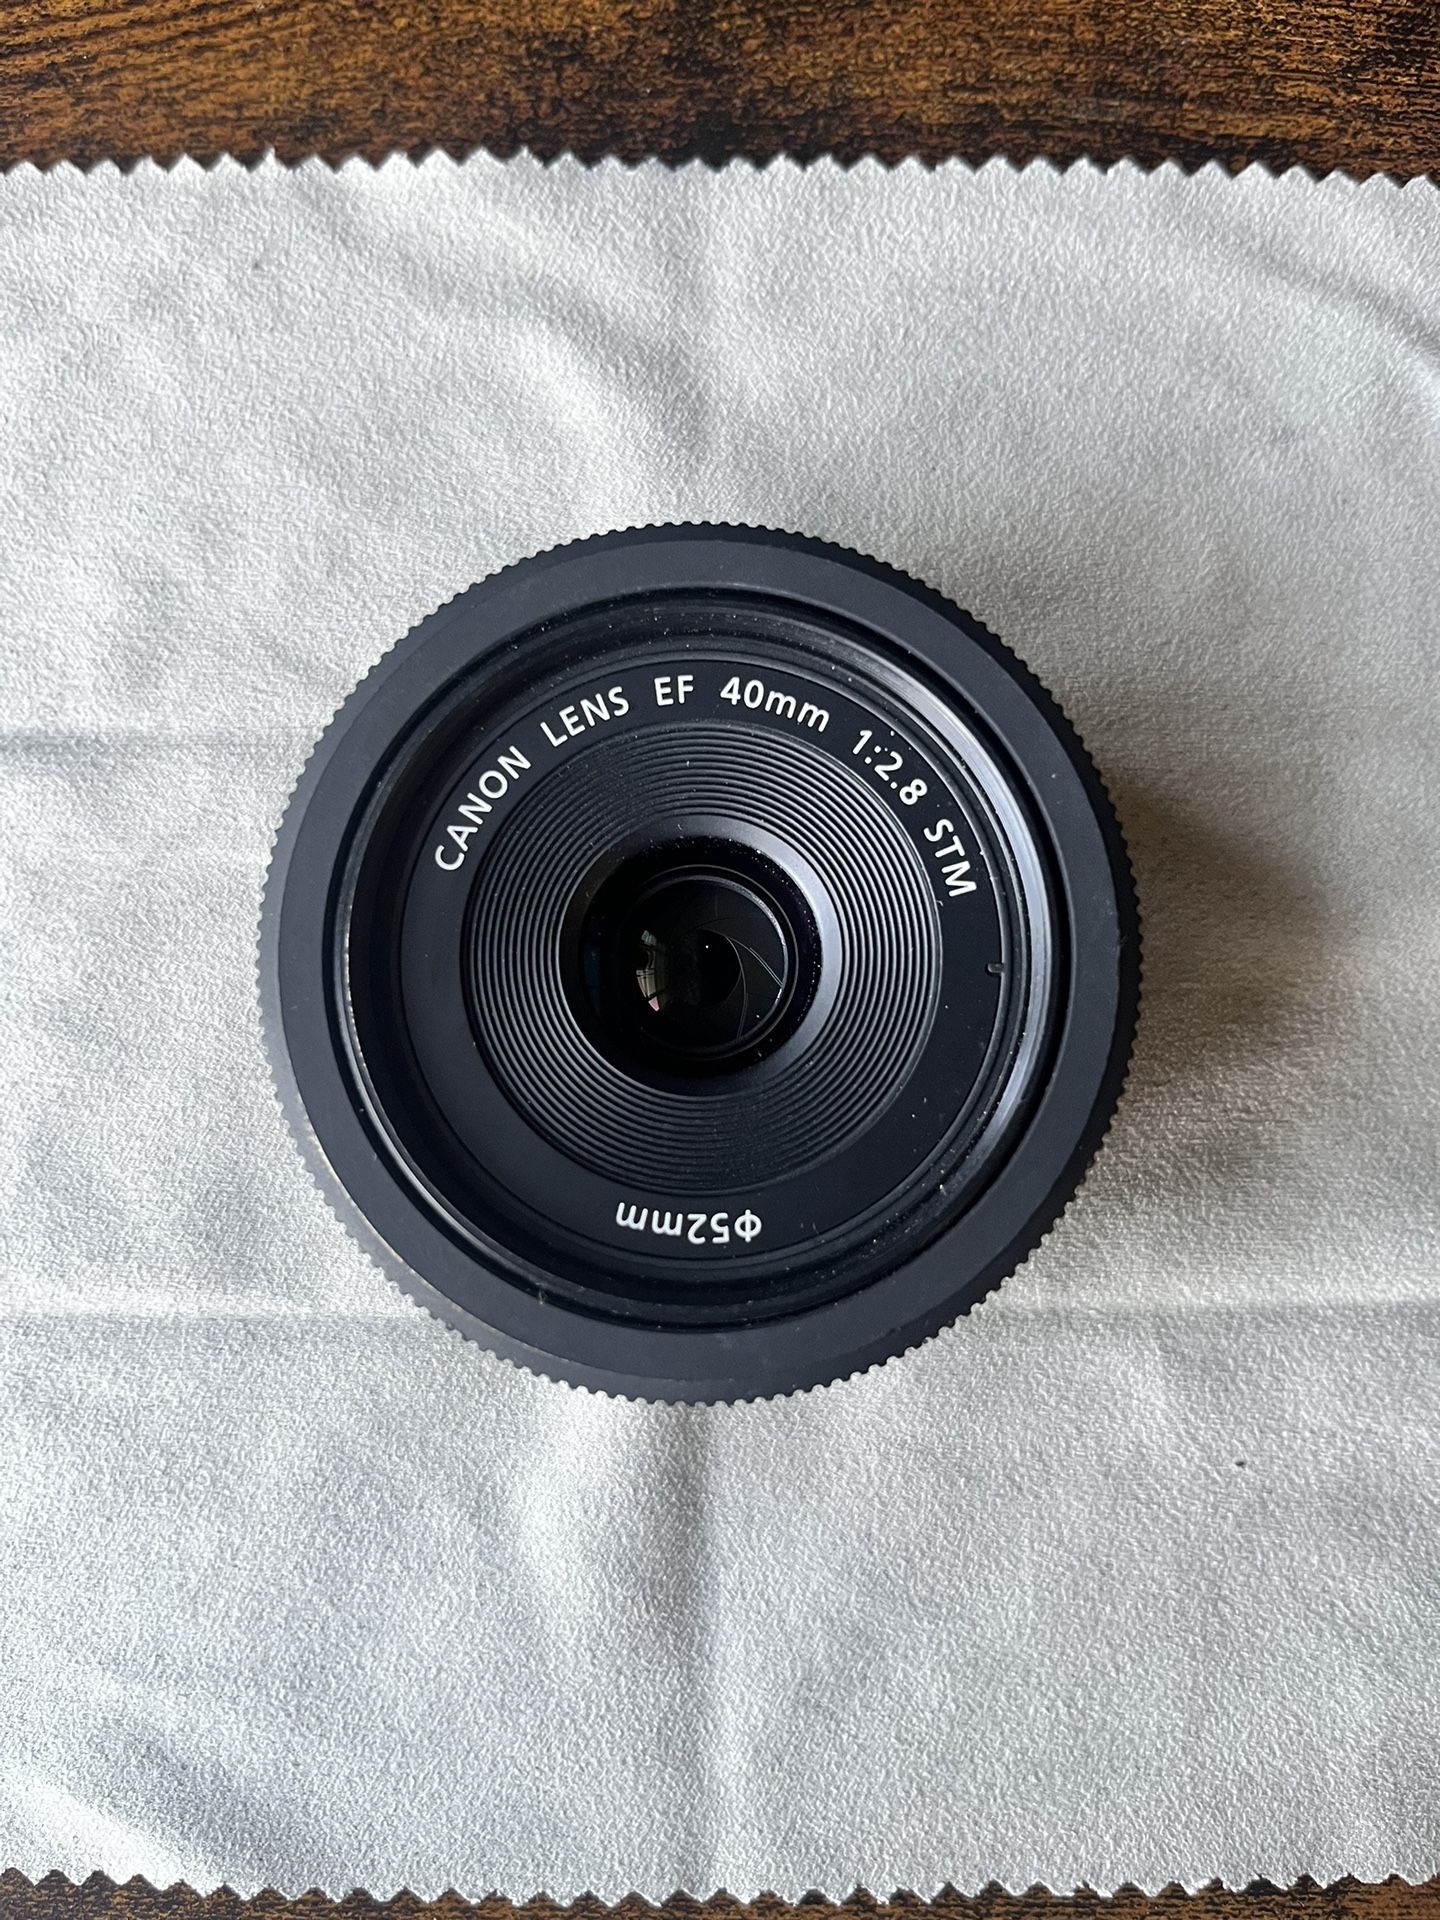 Canon EF 40mm F2.8 (stm)